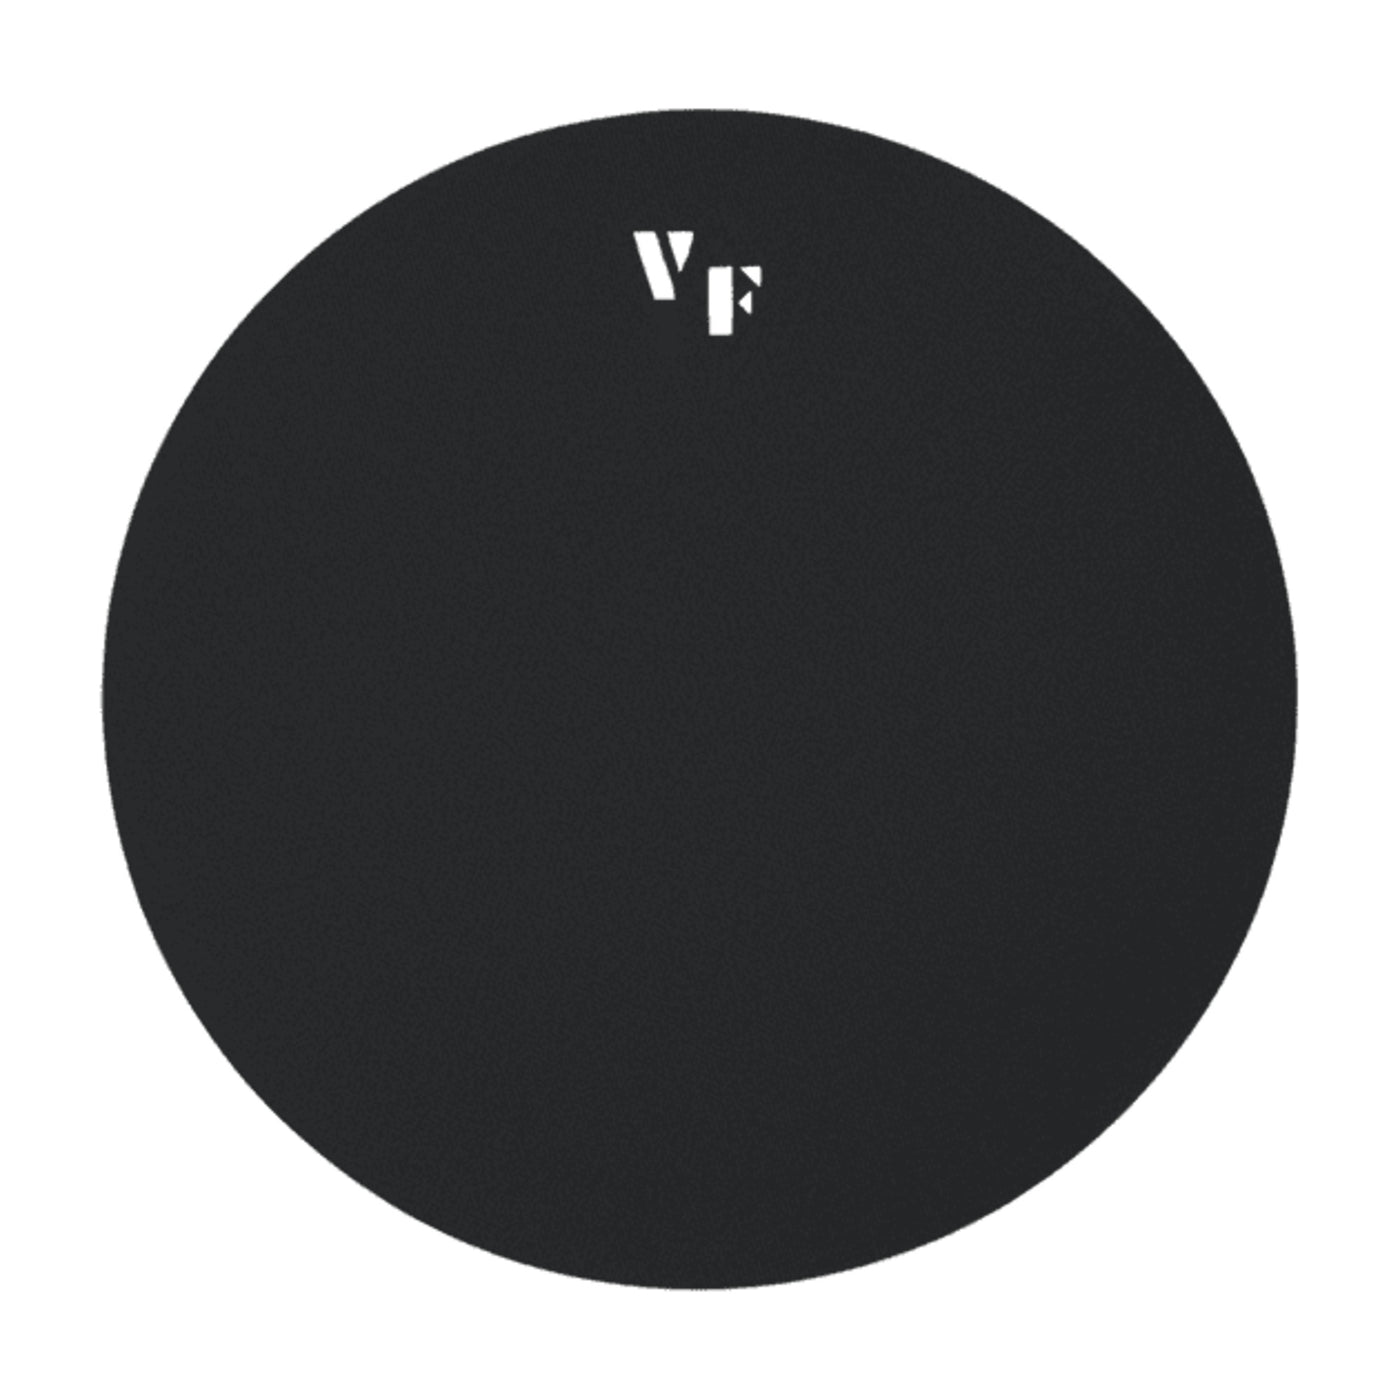 Vic Firth Vic Firth Individual Drum Mute, 14-inch Mute (VICMUTE14)